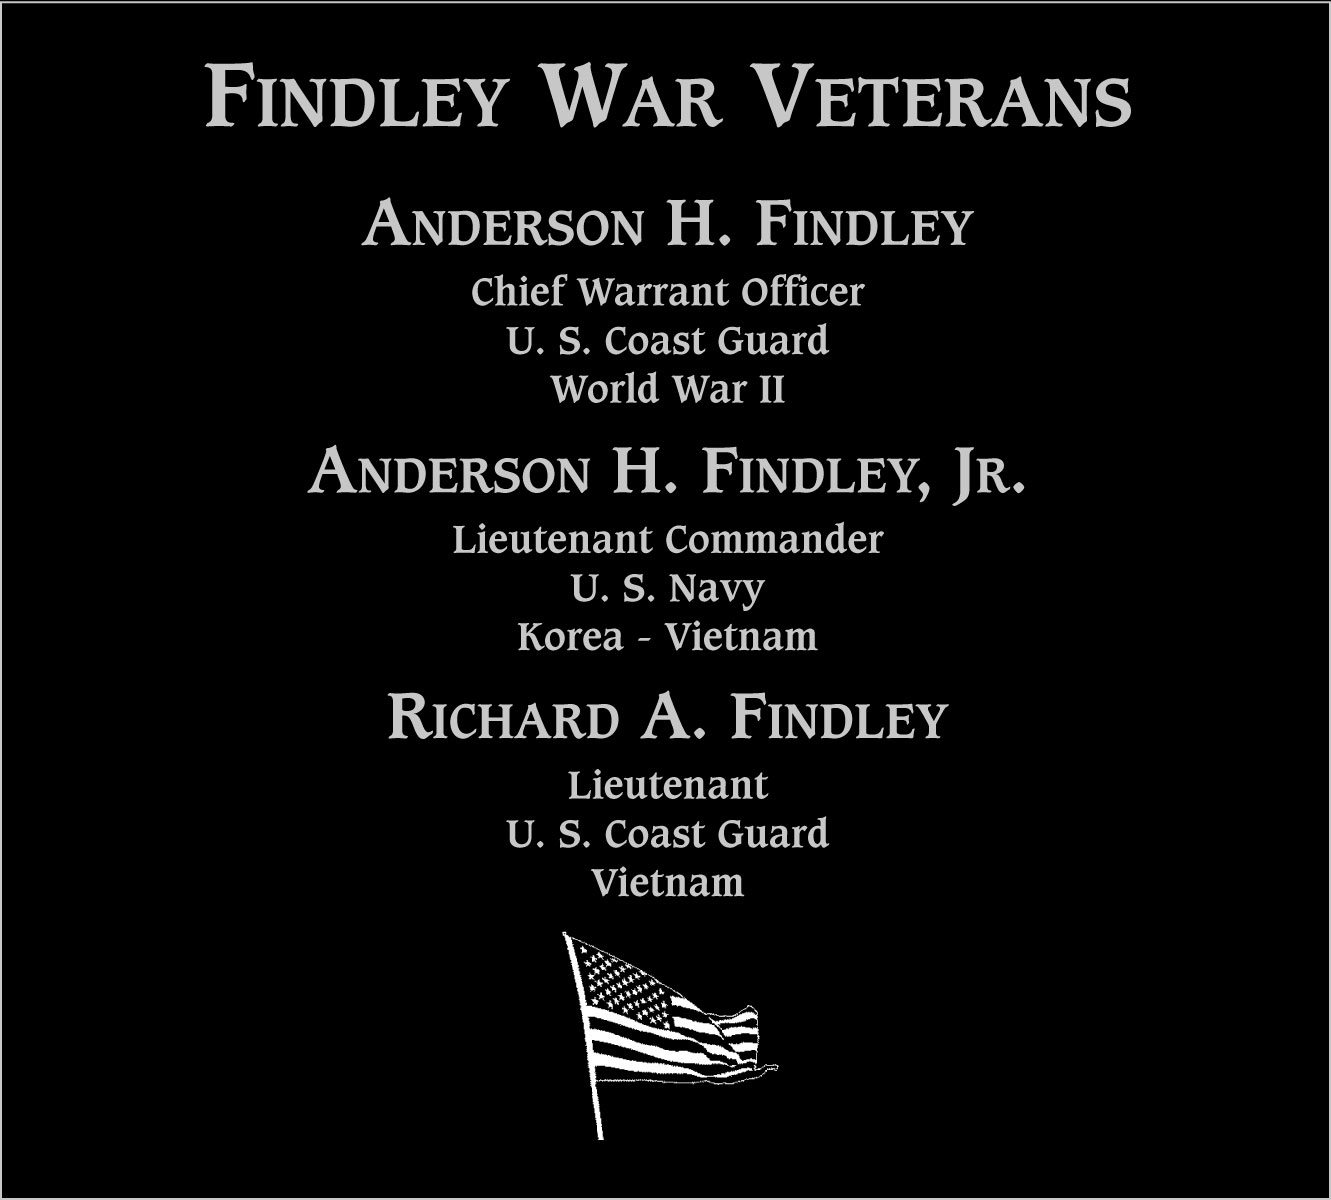 Anderson H. Findley, jr